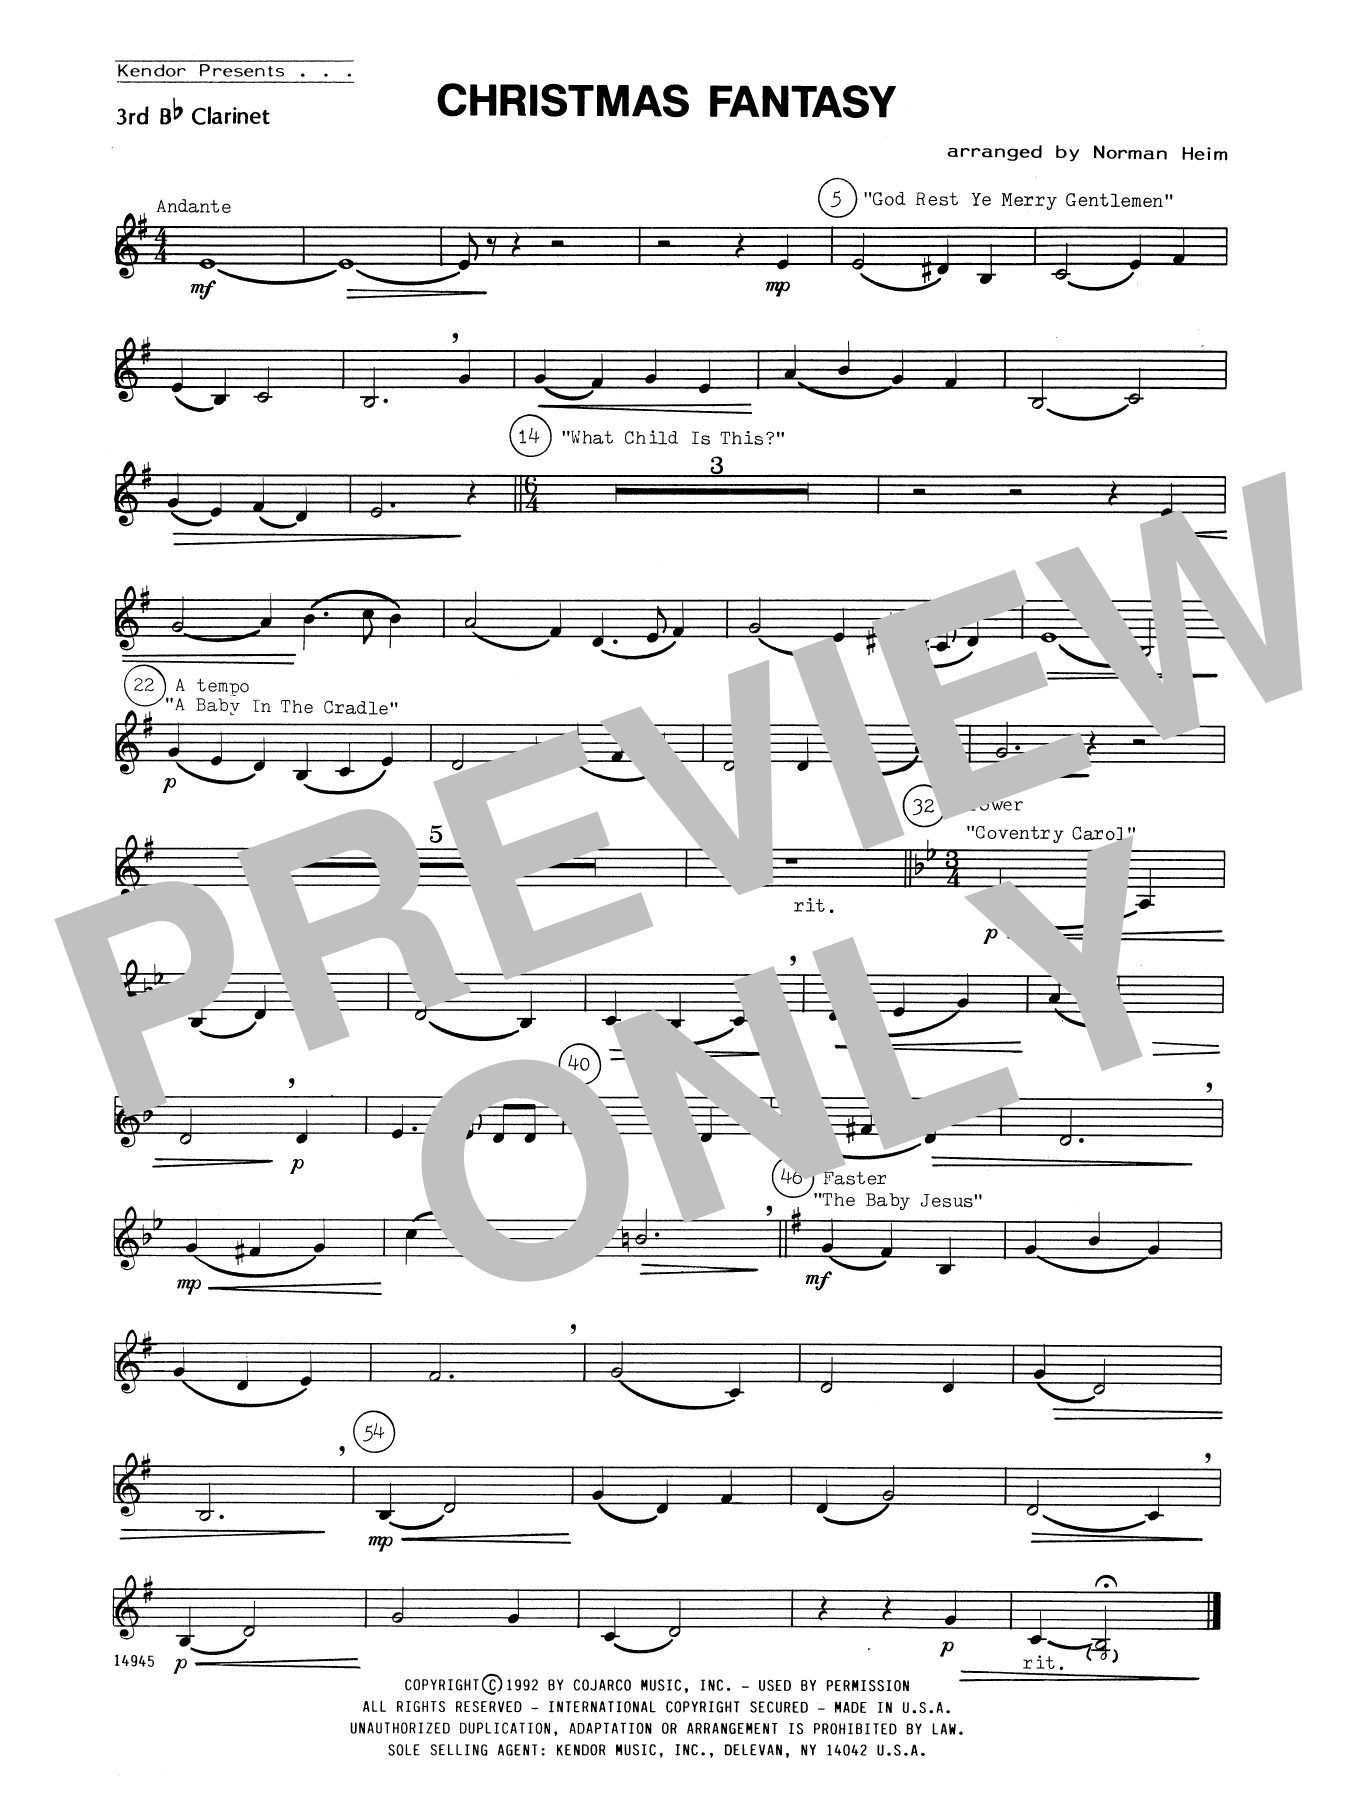 Download Norman Heim Christmas Fantasy - 3rd Bb Clarinet Sheet Music